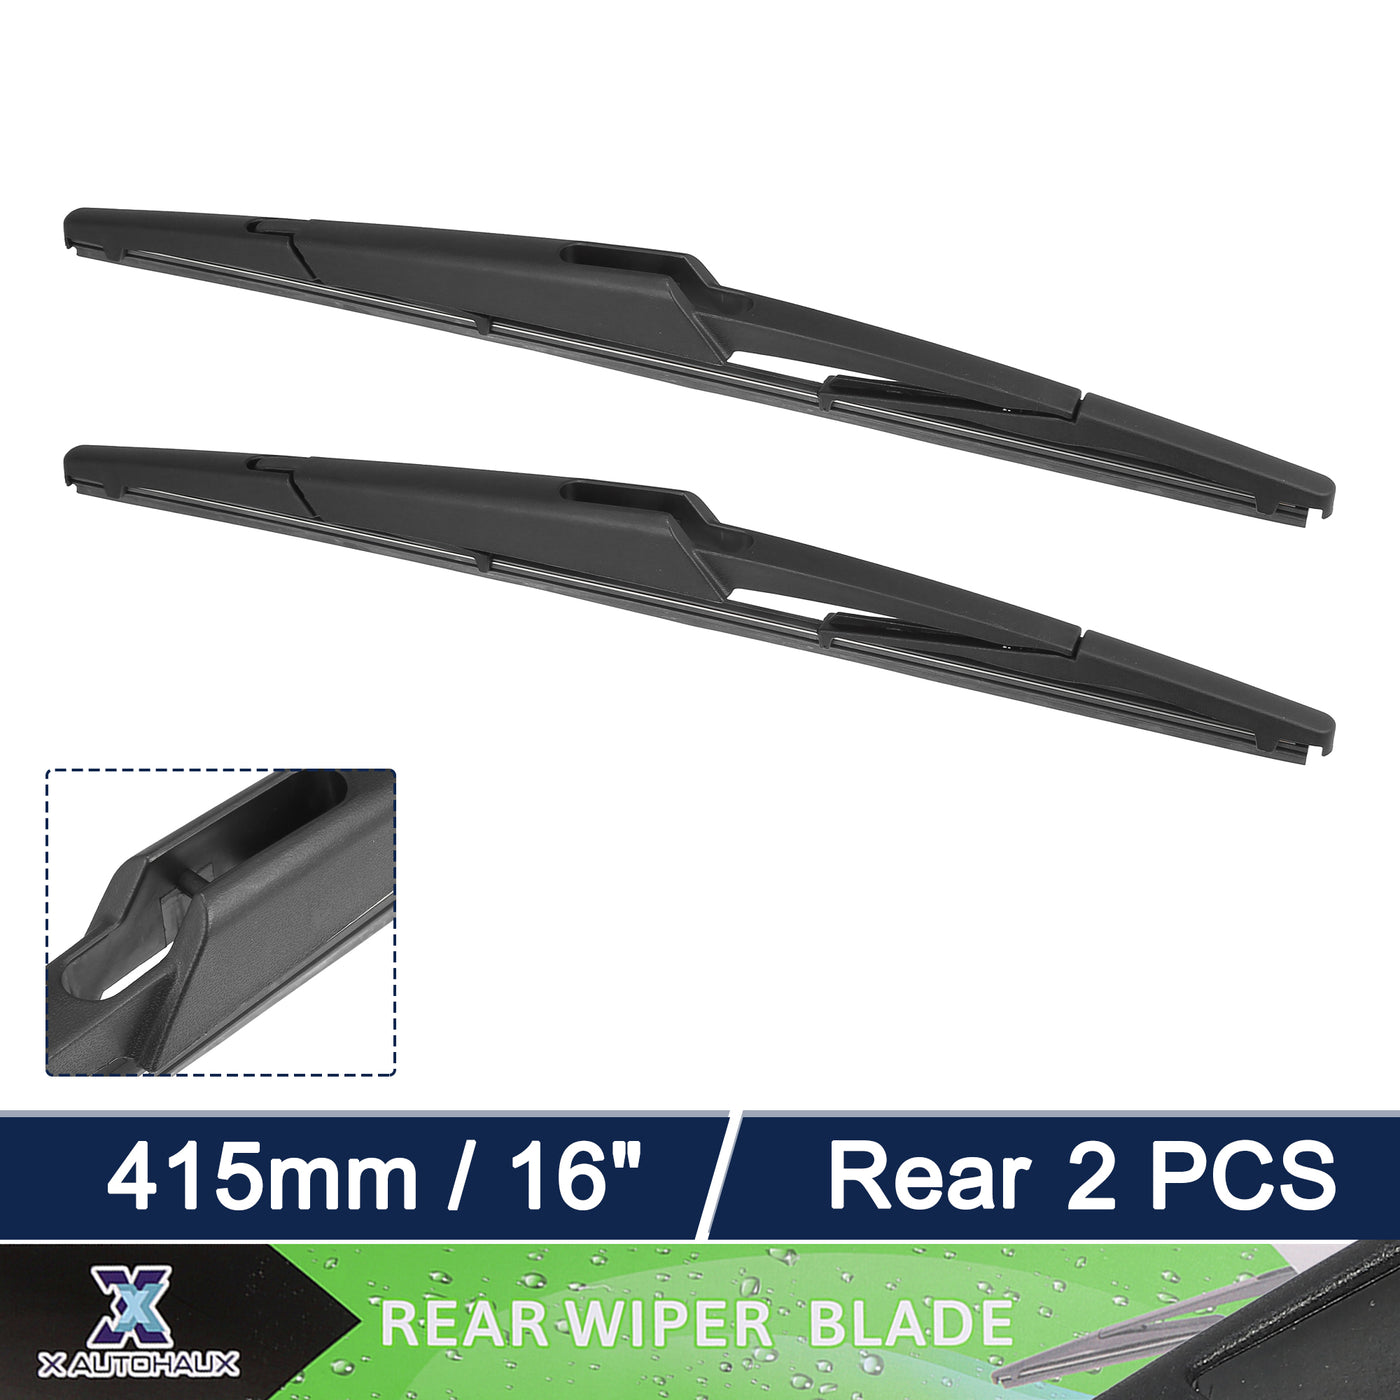 X AUTOHAUX 2pcs Rear Windshield Wiper Blade Replacement for Kia Sedona 2006-2013 for Hyundai Entourage 2007-2010